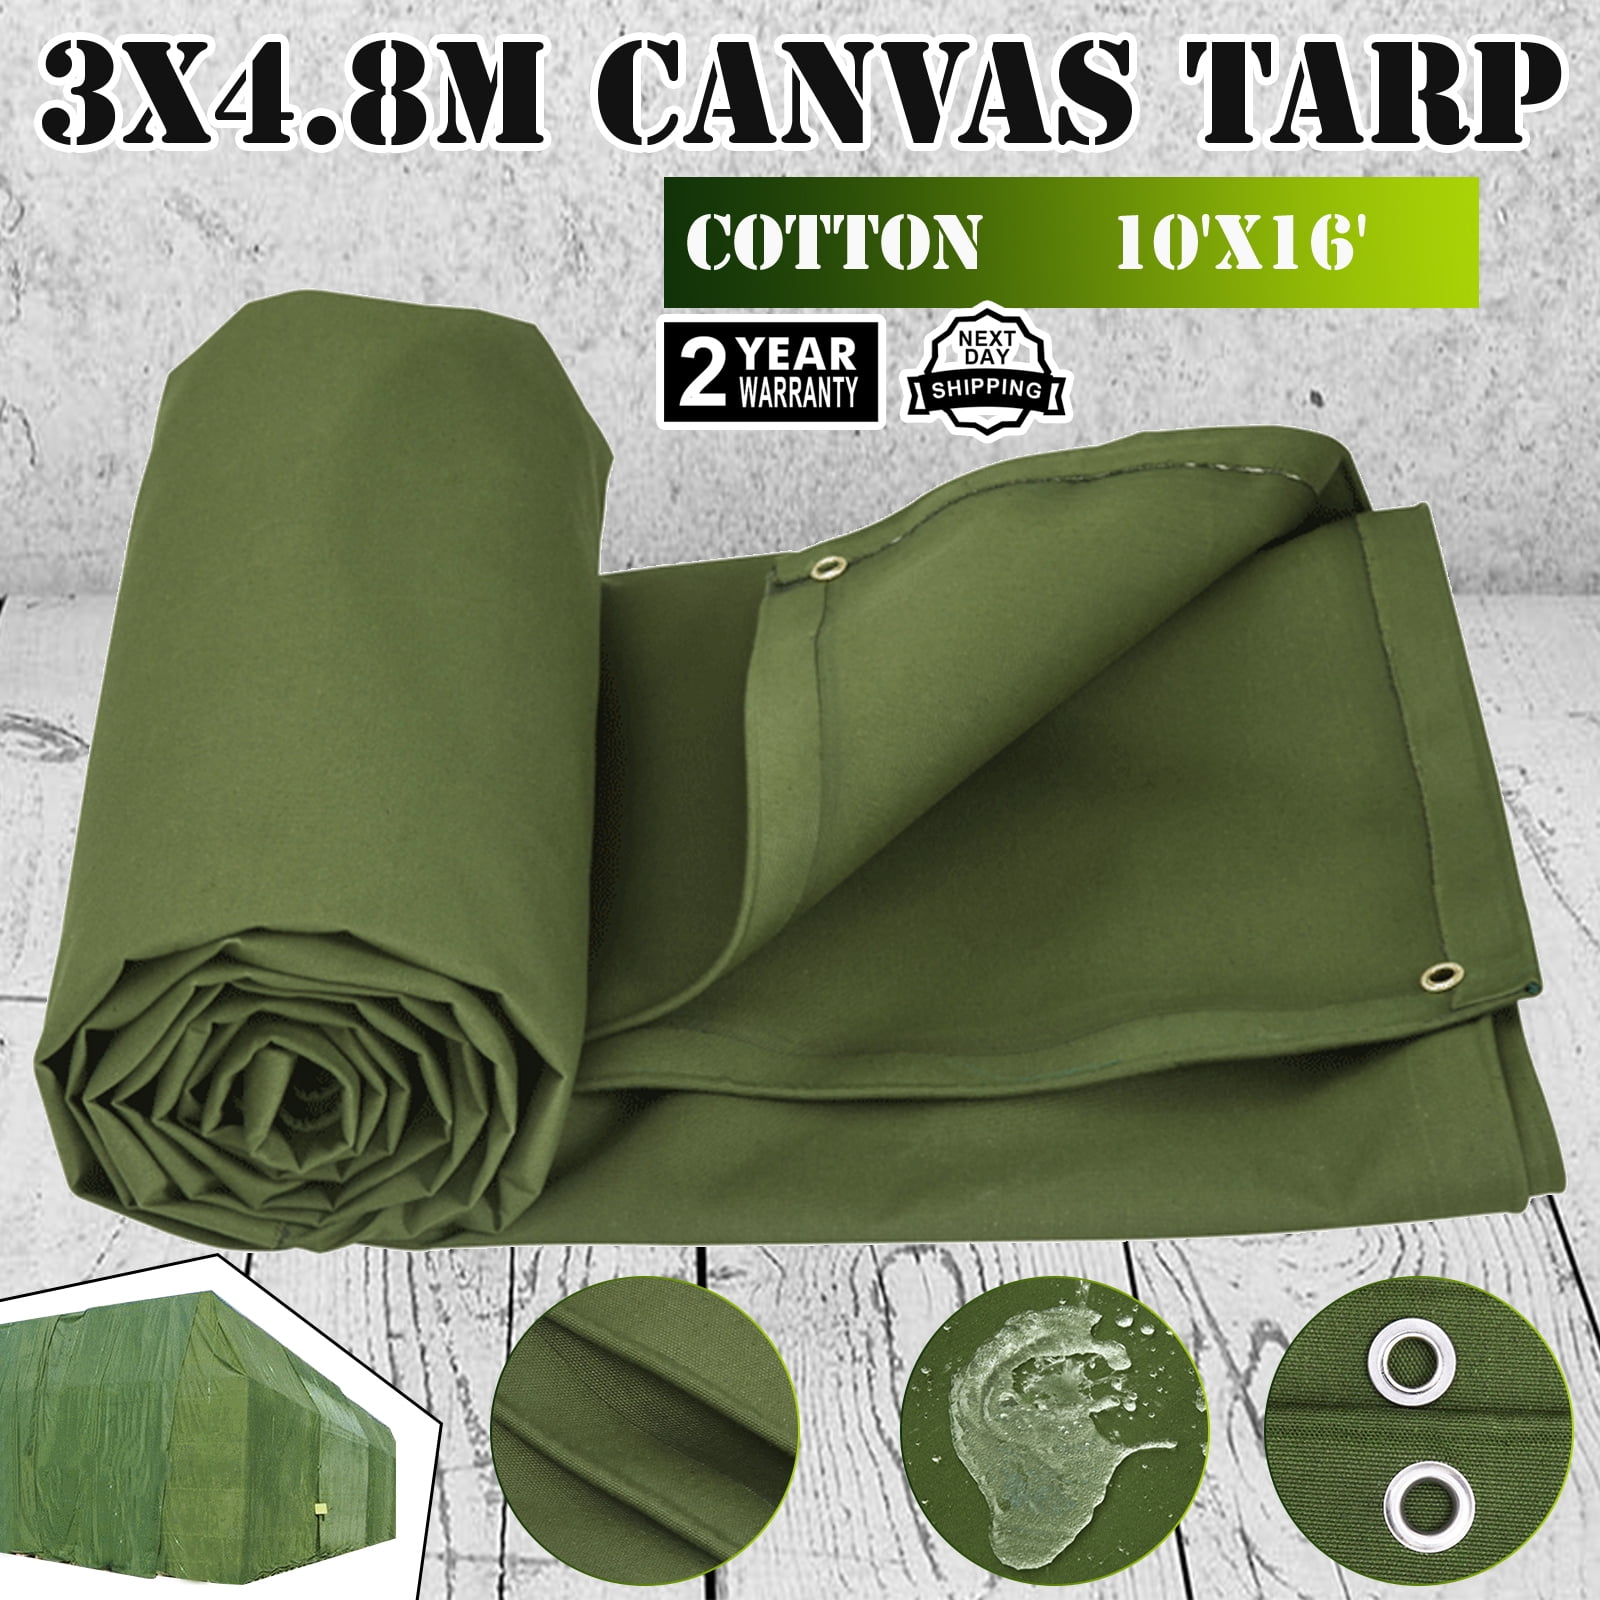 VEVOR 8' x 12' Canvas Tarp 18 oz Extra Heavy Duty Tarpaulin Water Resistant